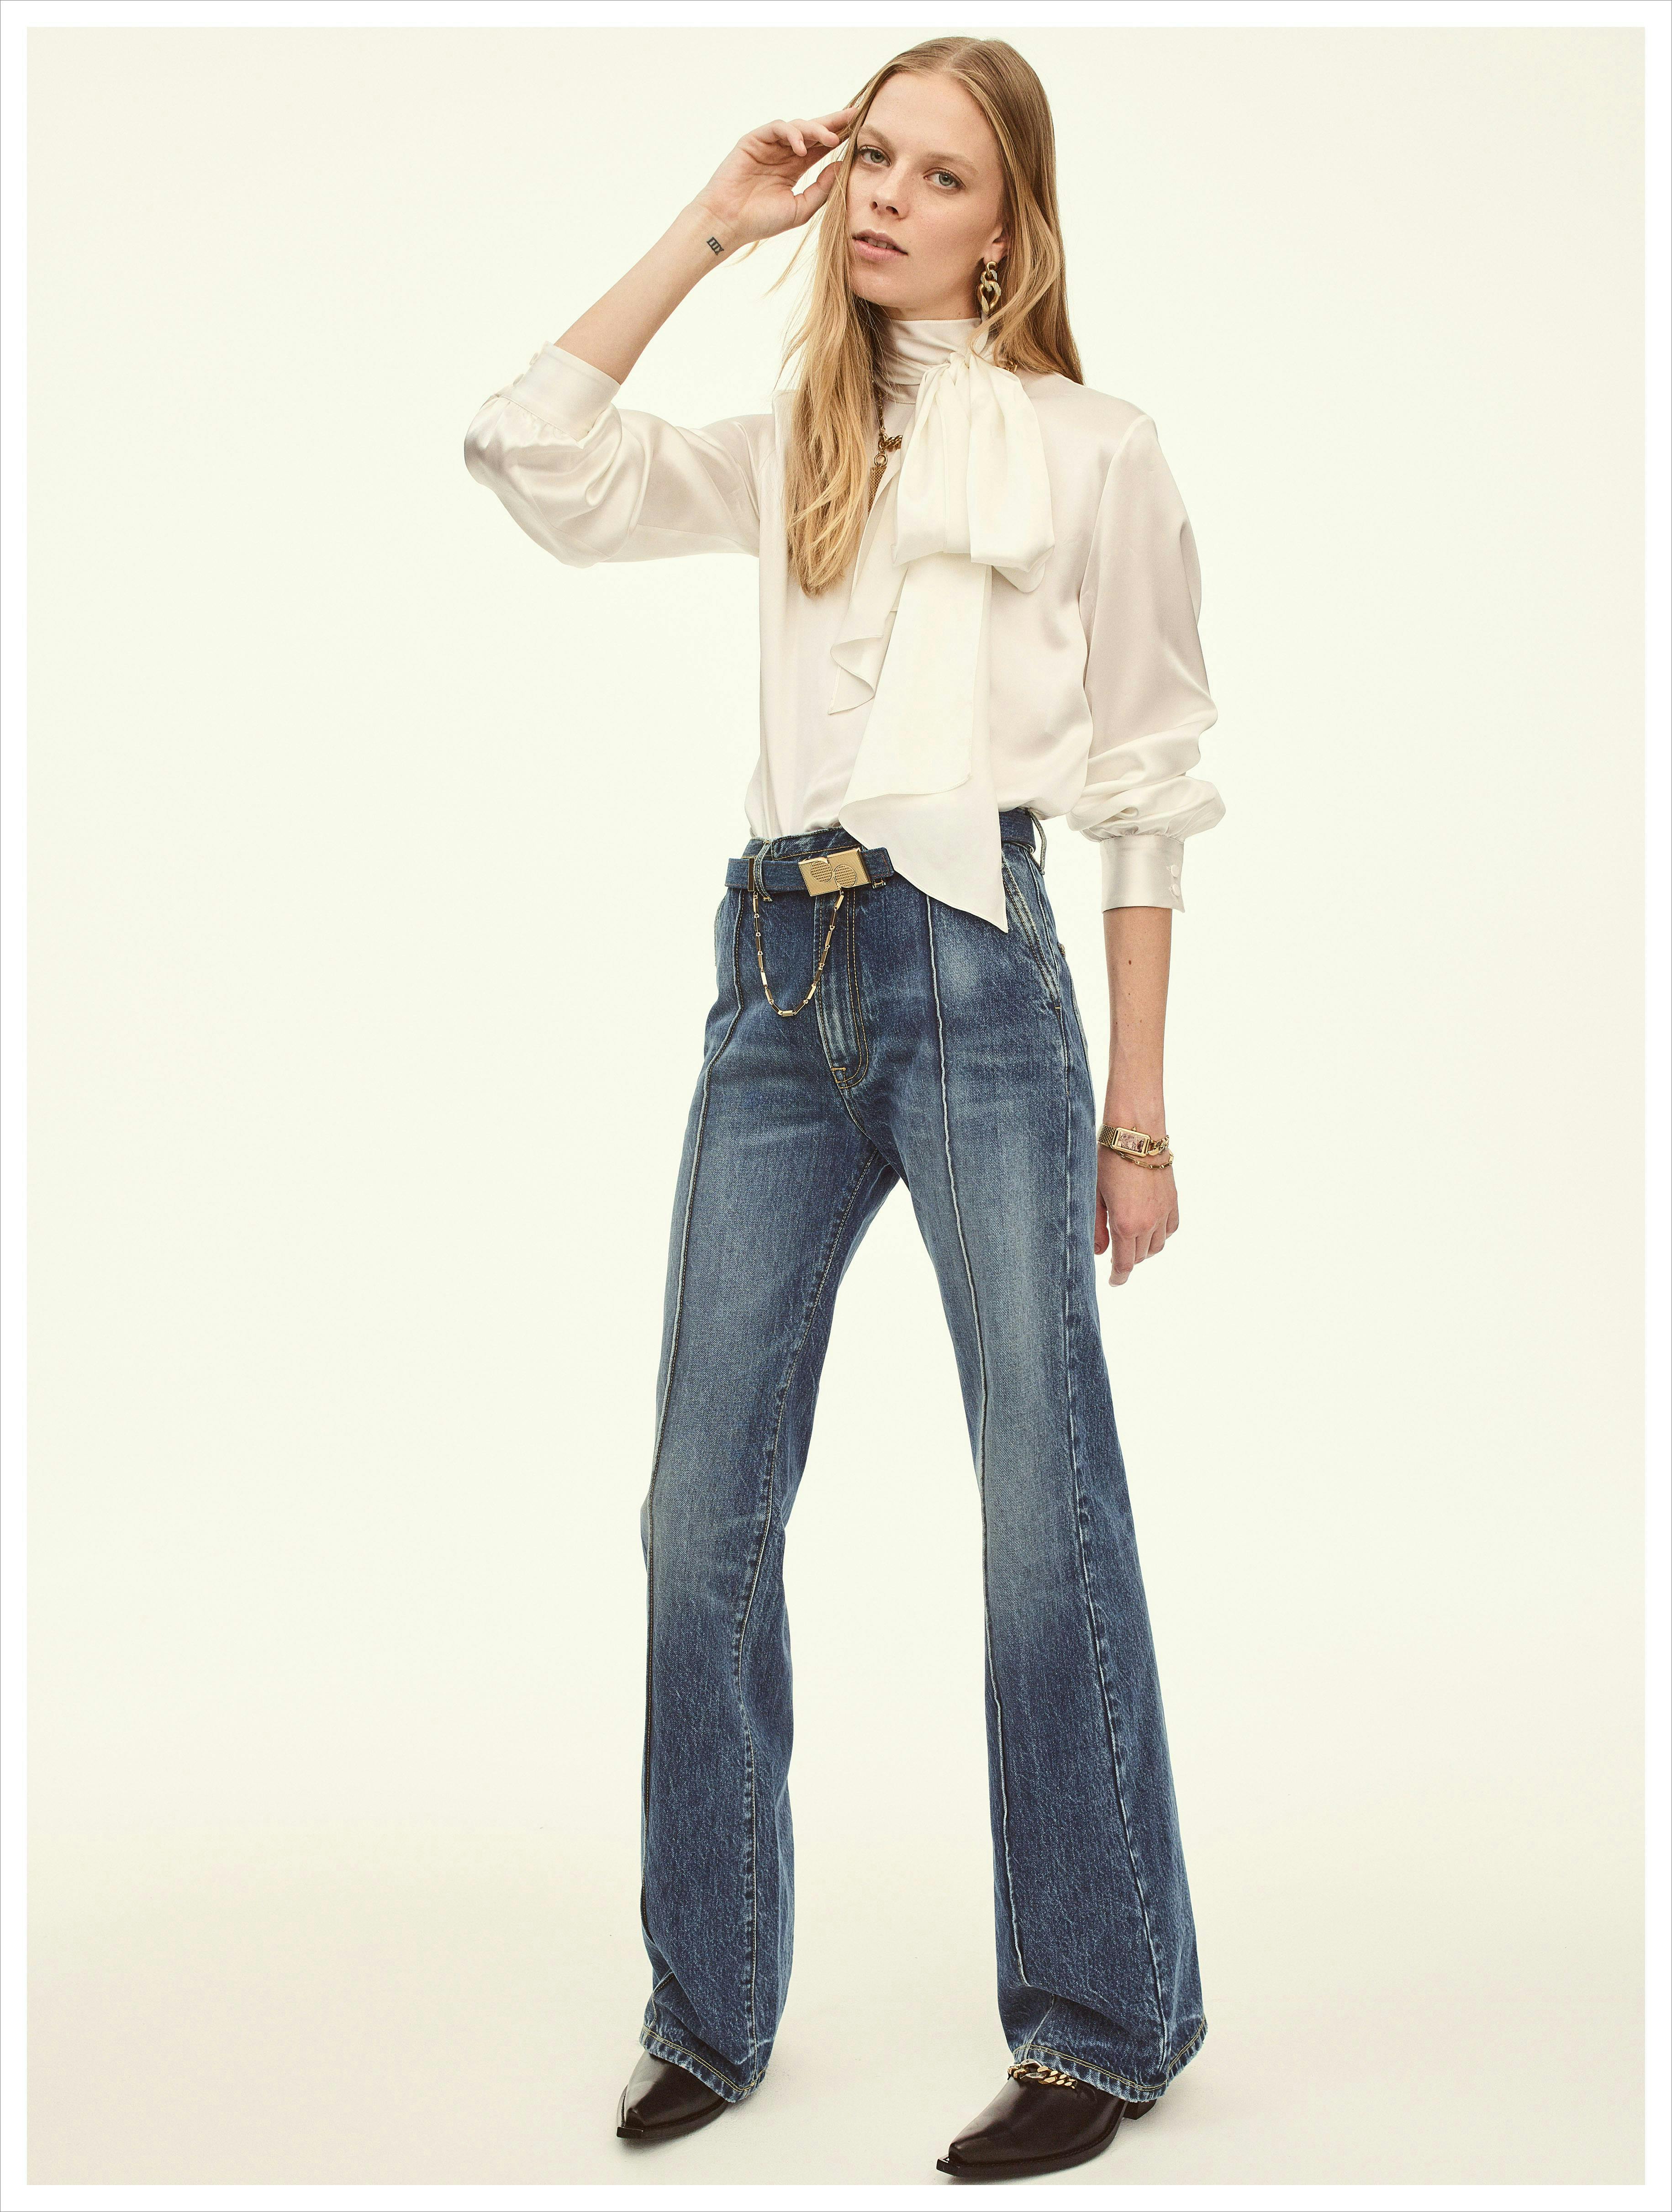 clothing apparel pants human female person denim jeans sleeve woman